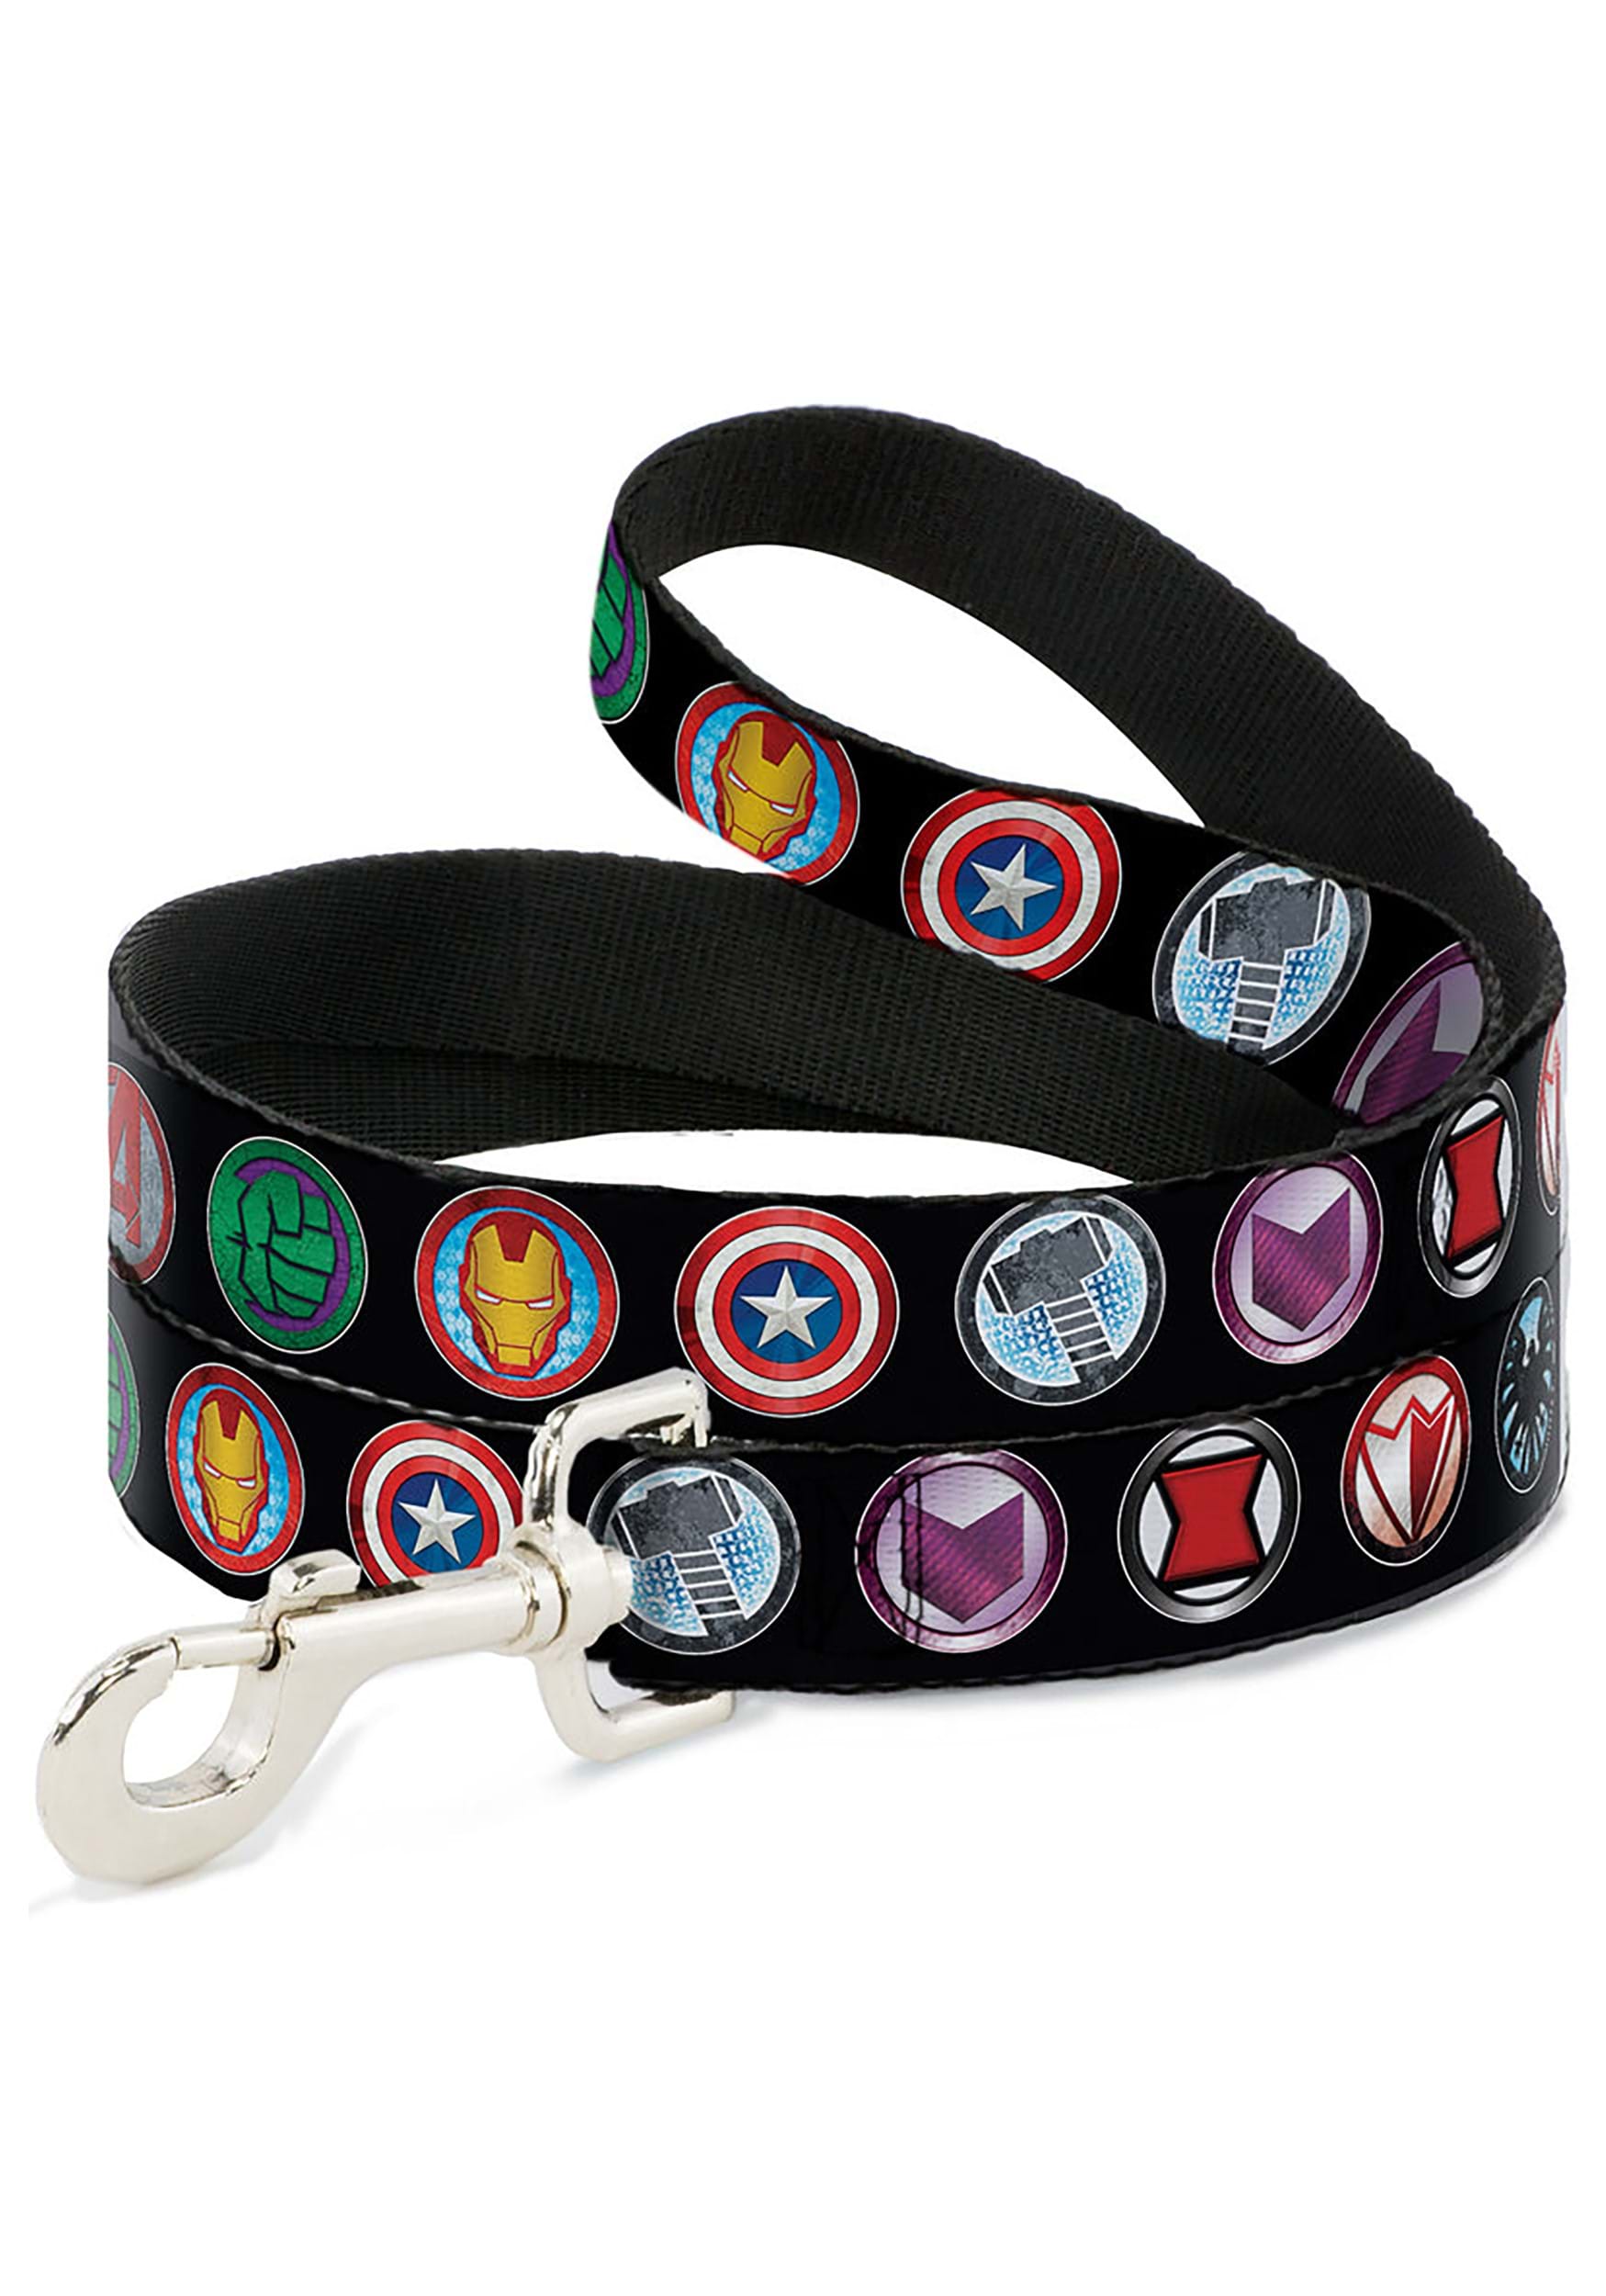 Avengers Icons Color Dog Leash